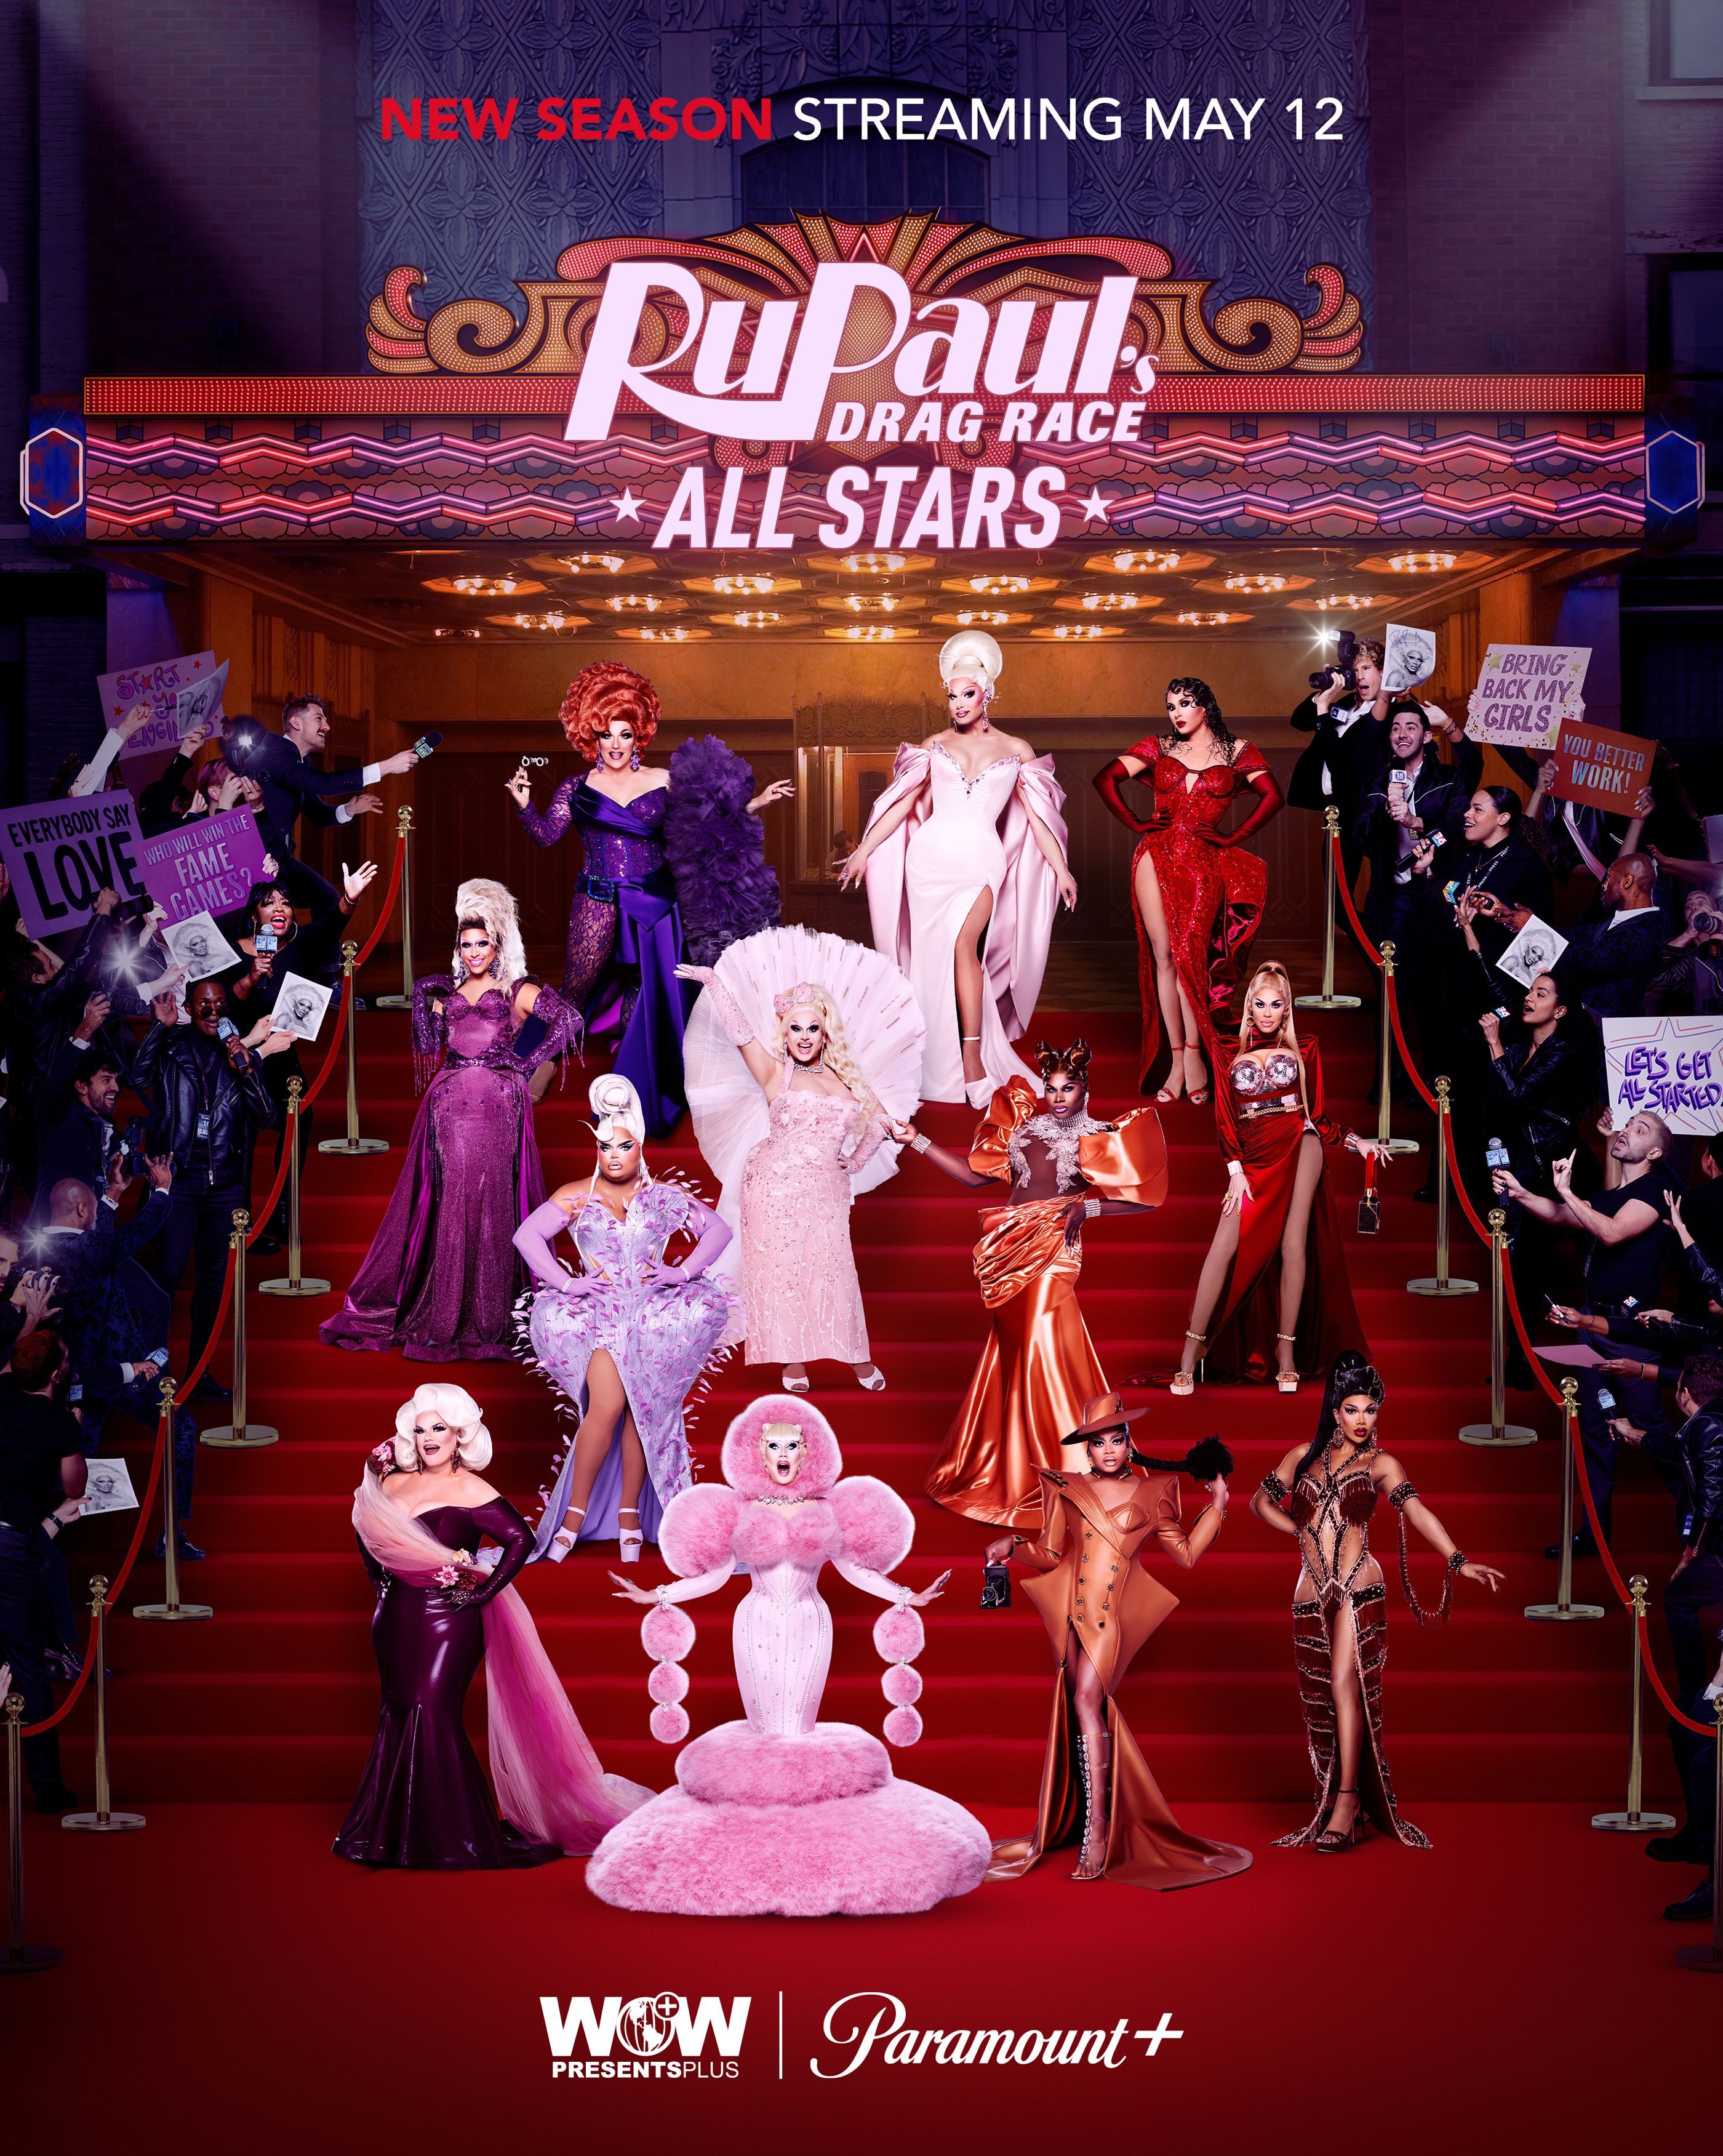 Who will win Rupaul's Drag Race All Stars Season 8? : r